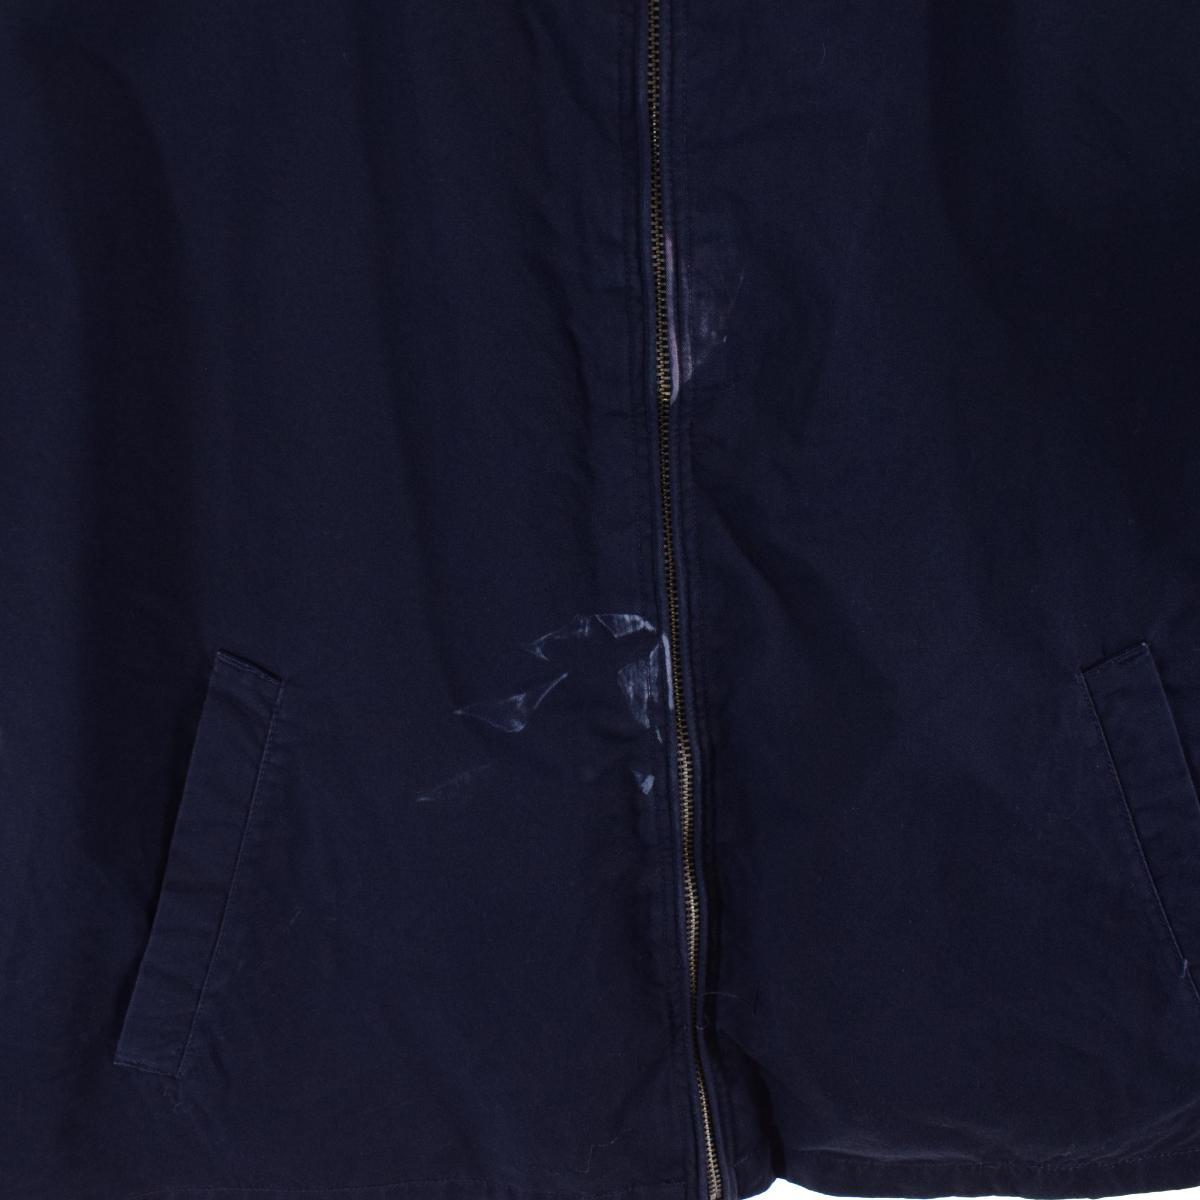  б/у одежда Ralph Lauren Ralph Lauren POLO RALPH LAUREN - Lynn тонн жакет куртка от дождя мужской XL /eaa323187